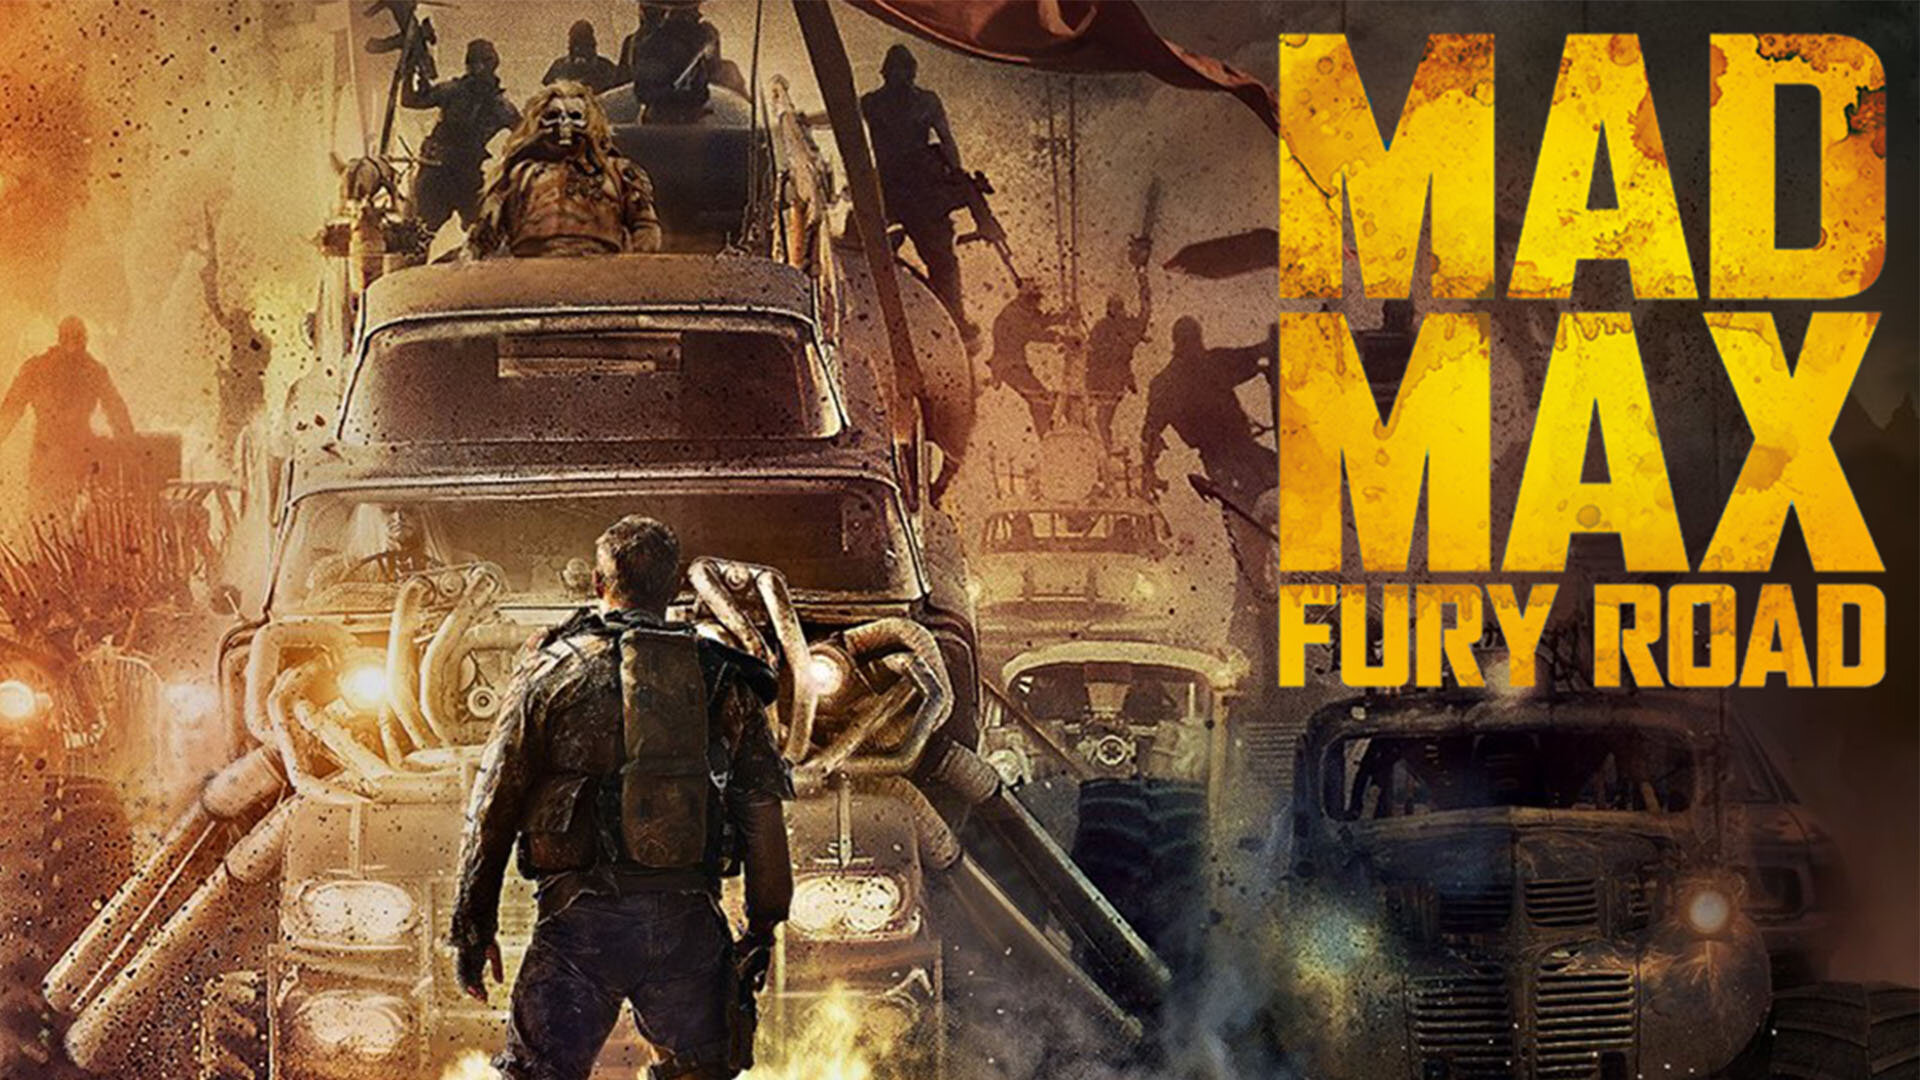 Mad Max - 4K movie database - FlatpanelsHD